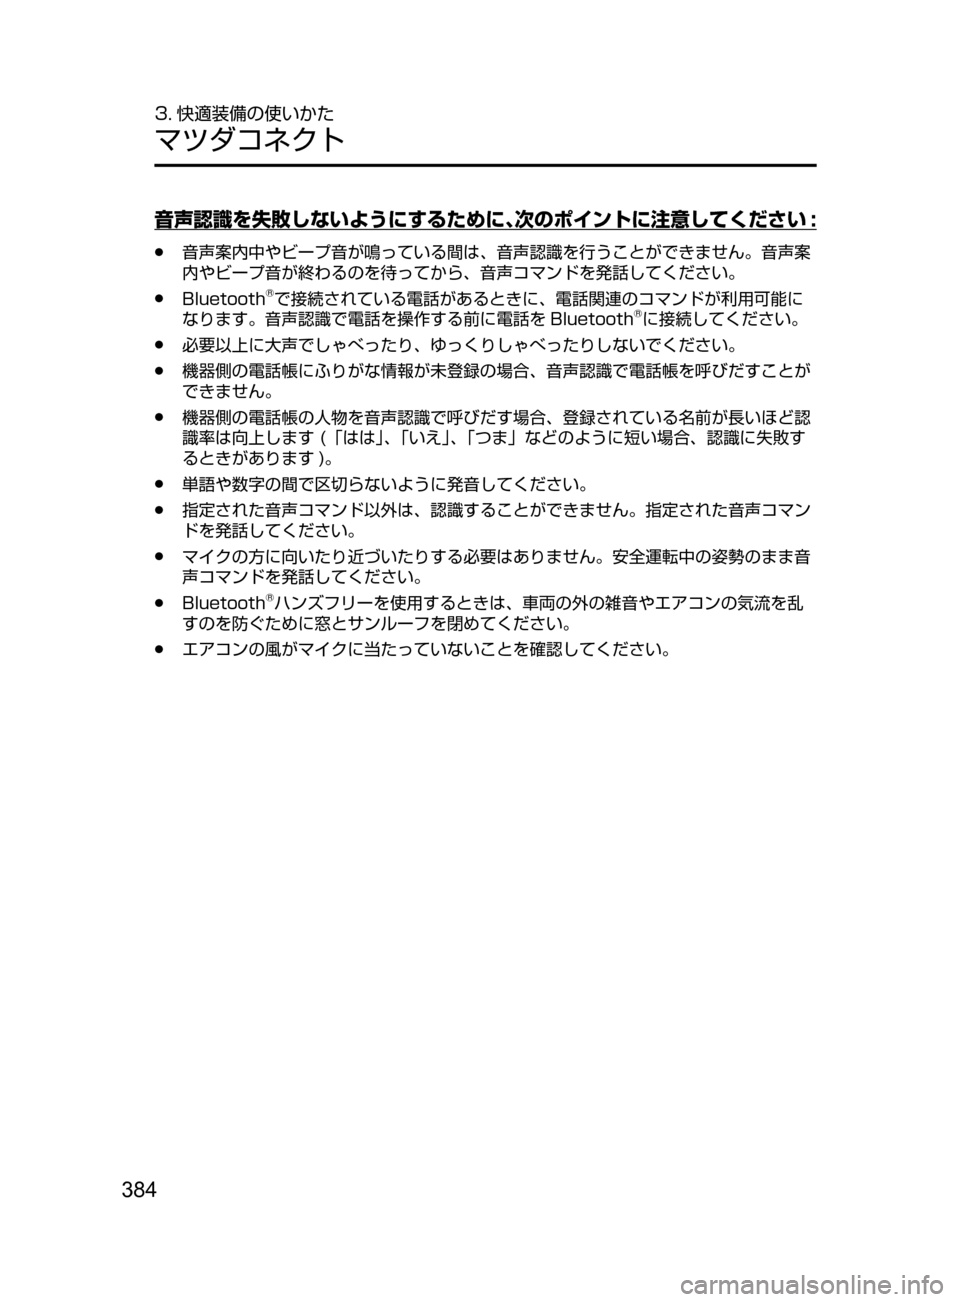 MAZDA MODEL ATENZA 2016  アテンザ｜取扱説明書 (in Japanese) 384
3. 快適装備の使いかた
マツダコネクト
音声認識を失敗しないようにするために､次のポイントに注意してください :
﻿﻿●音声案内中やビープ�